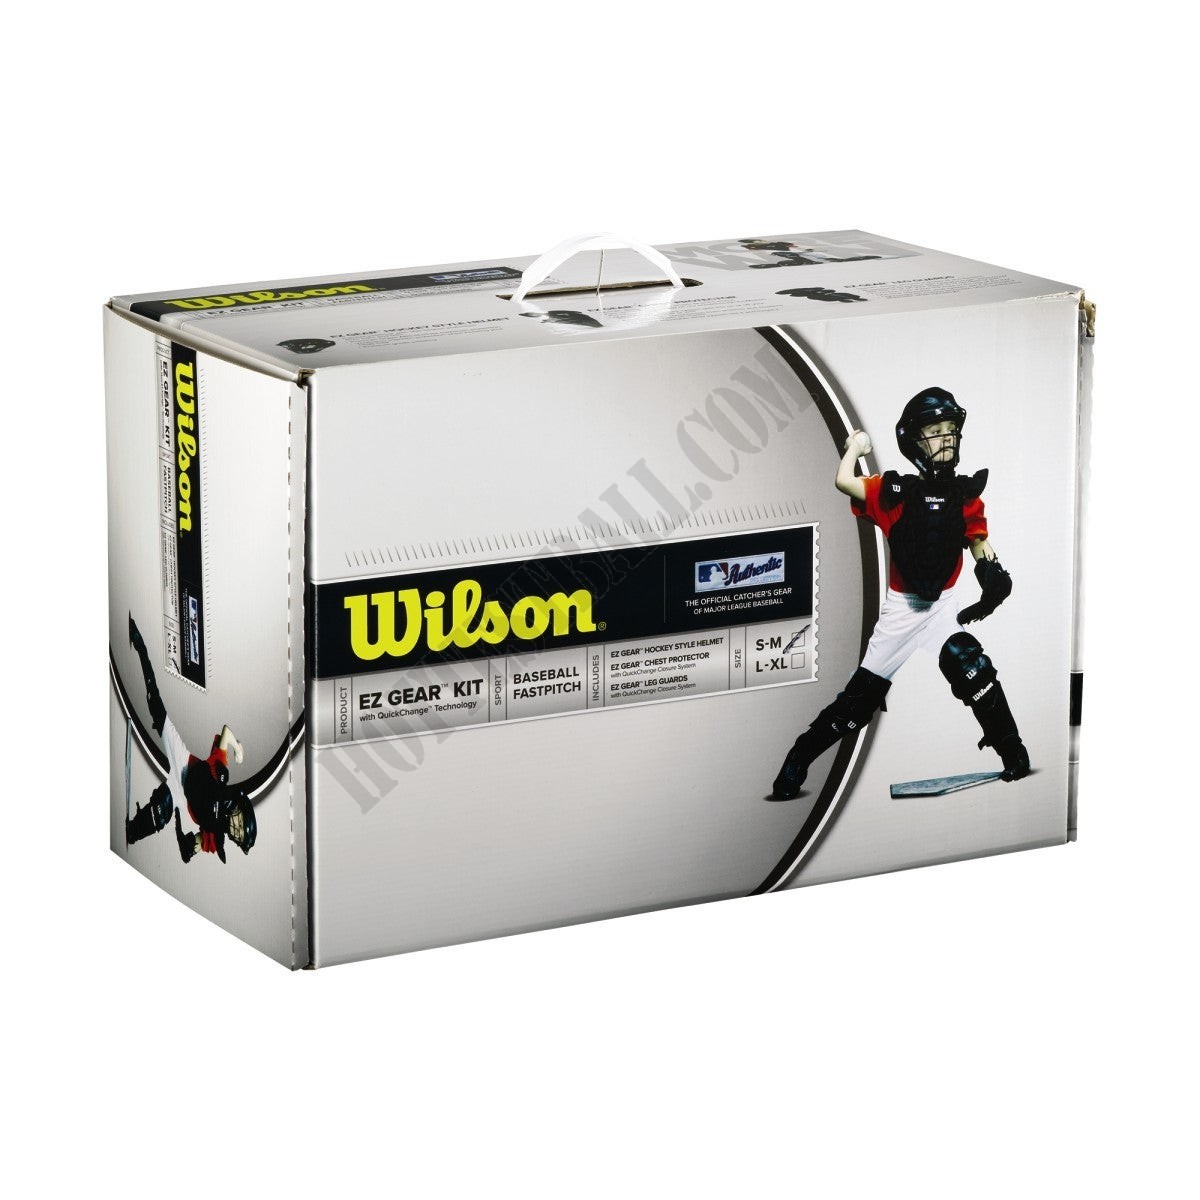 EZ Gear Catcher's Kit - Colorado Rockies - Wilson Discount Store - -5